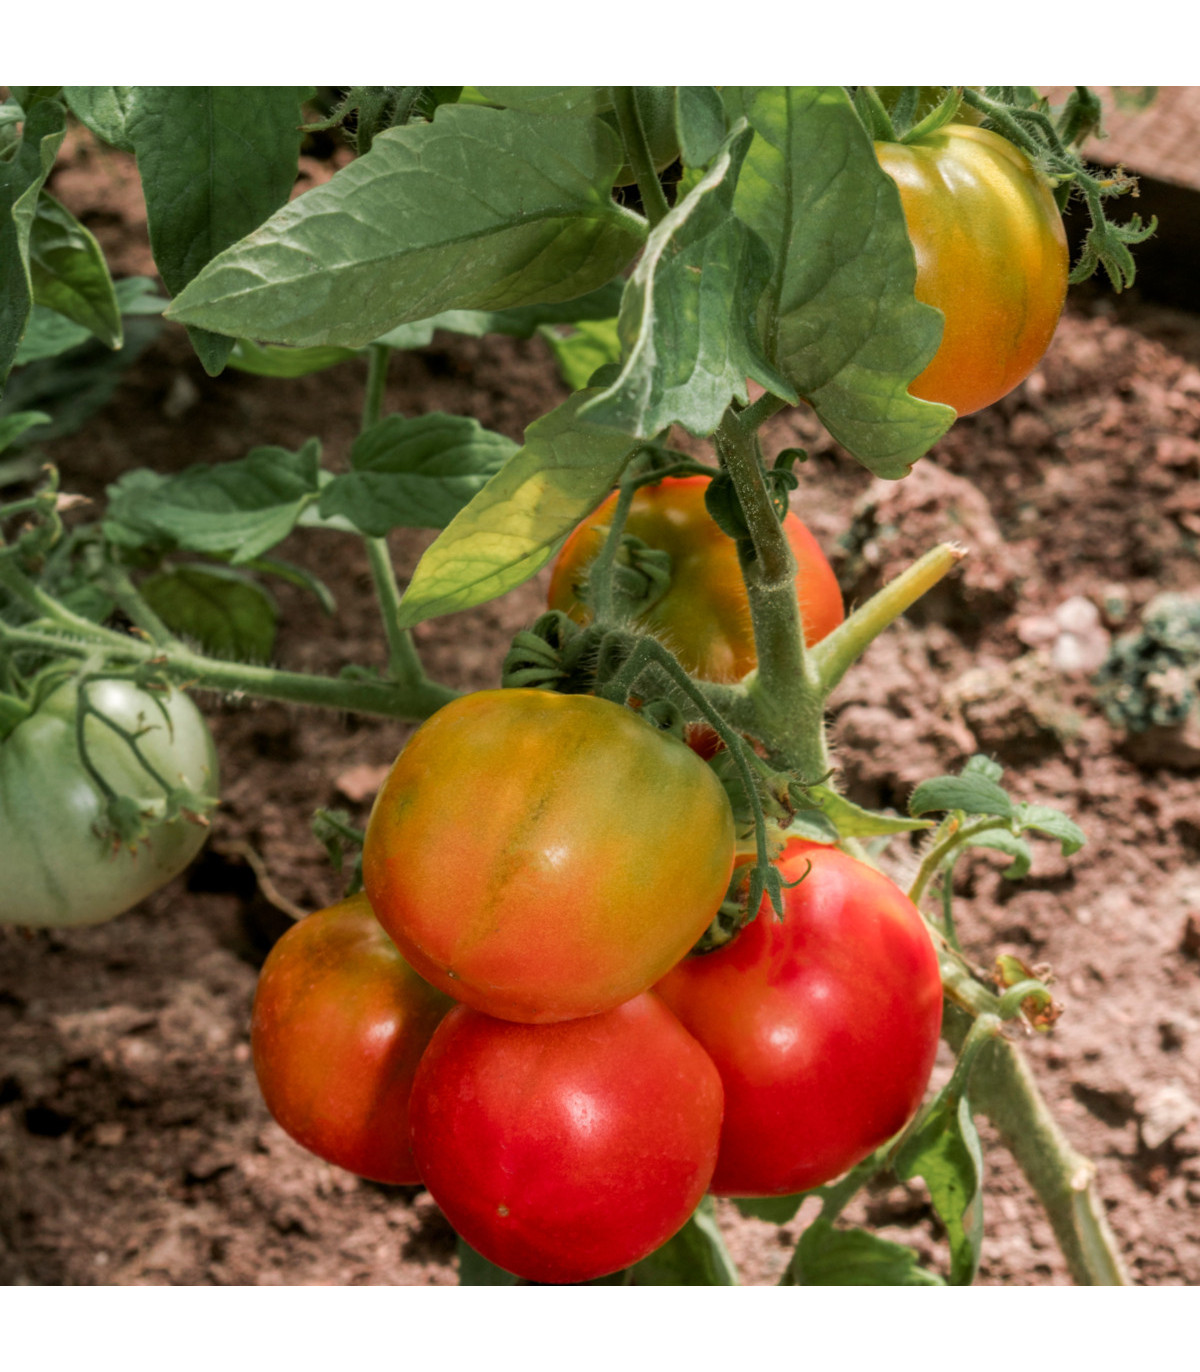 BIO Paradajka Taste F1 - Solanum lycopersicum - bio semená paradajky - 10 ks